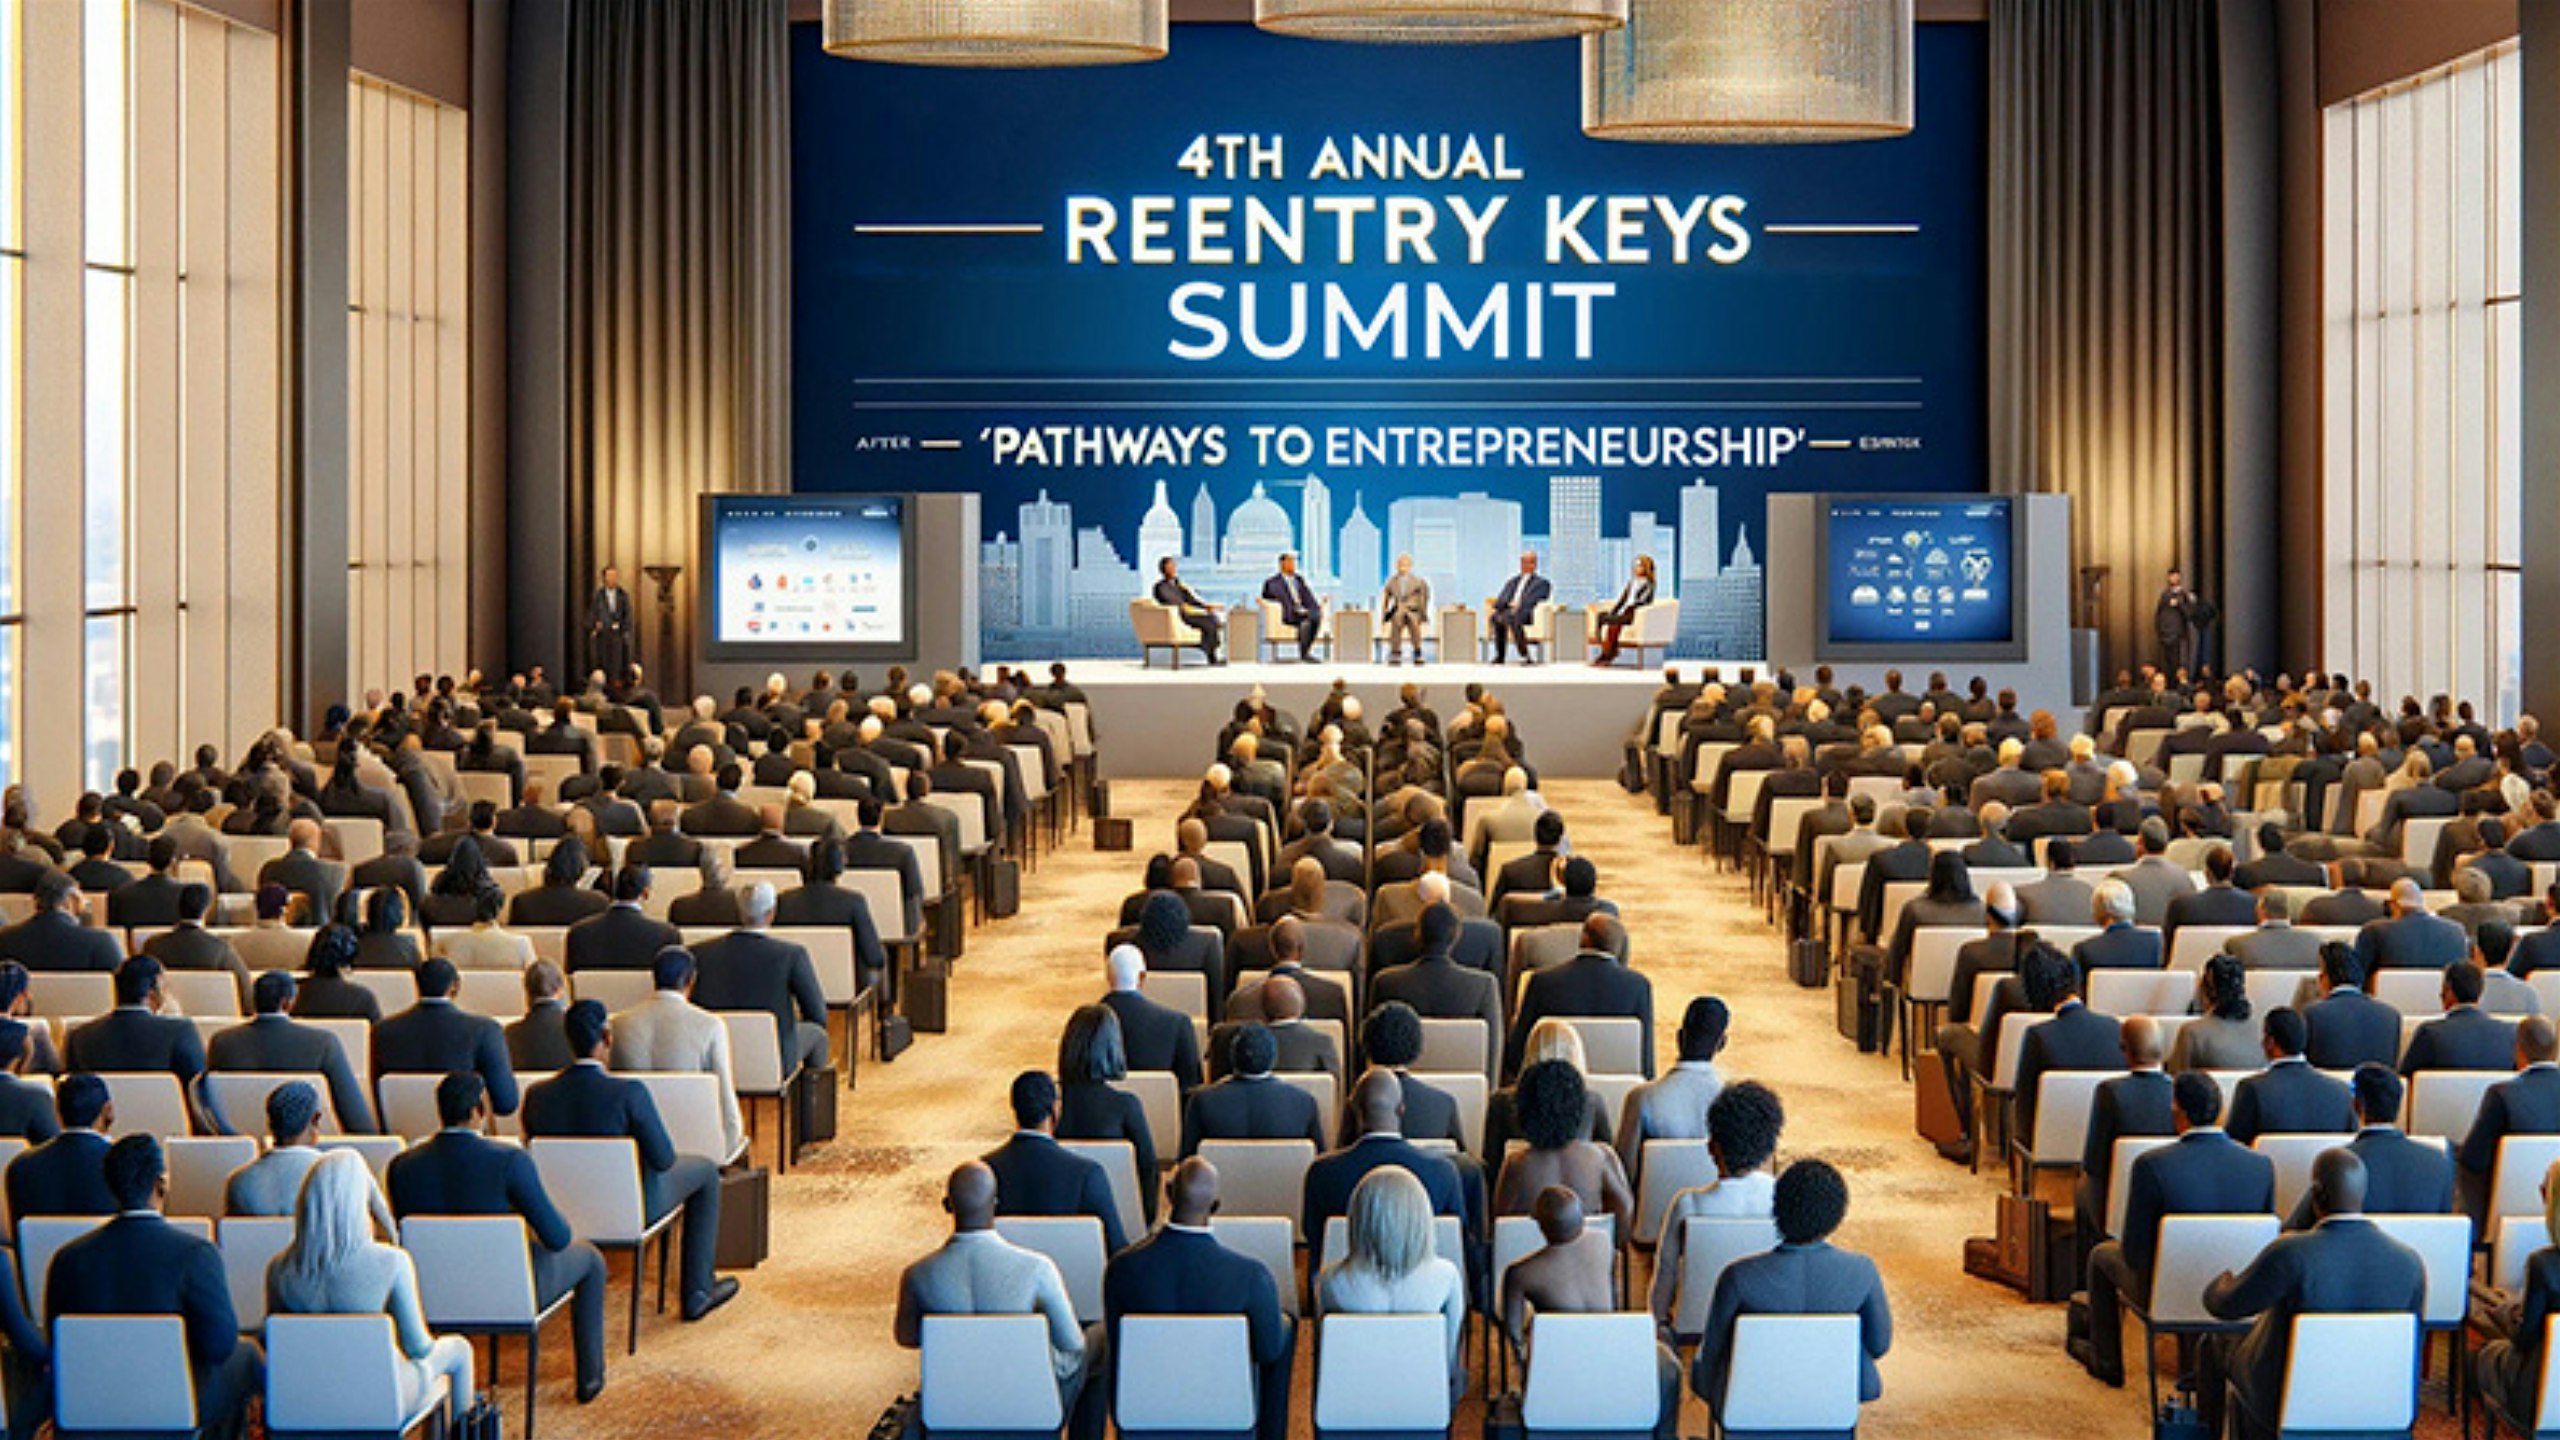 4th Annual Reentry Keys Summit, Pathways to Entrepreneurship